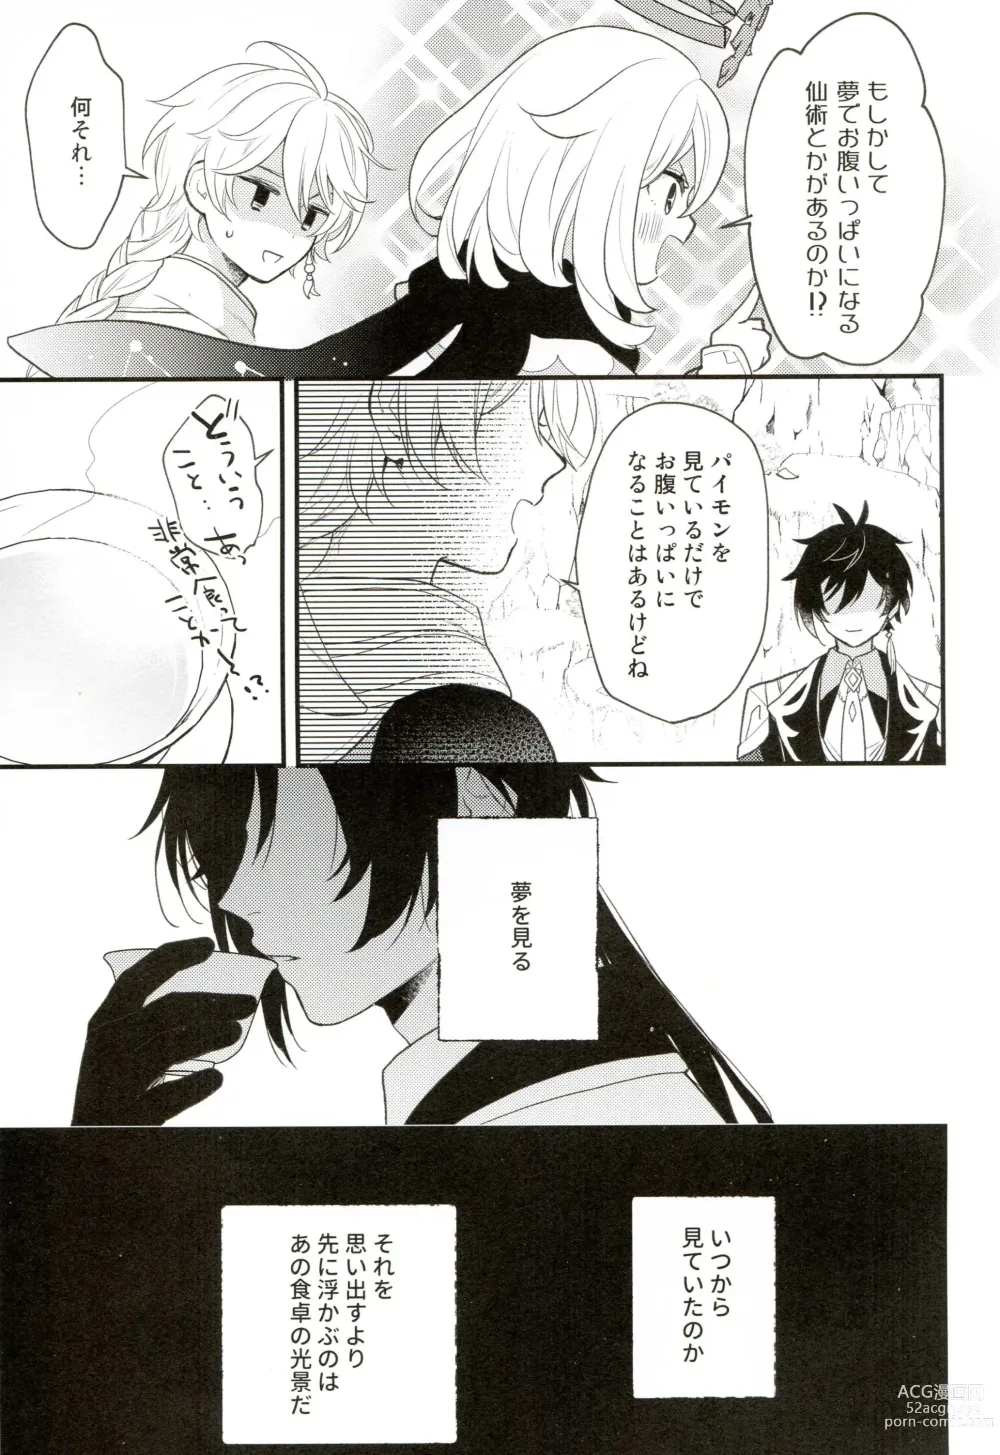 Page 8 of doujinshi 21 Gram no Bansan